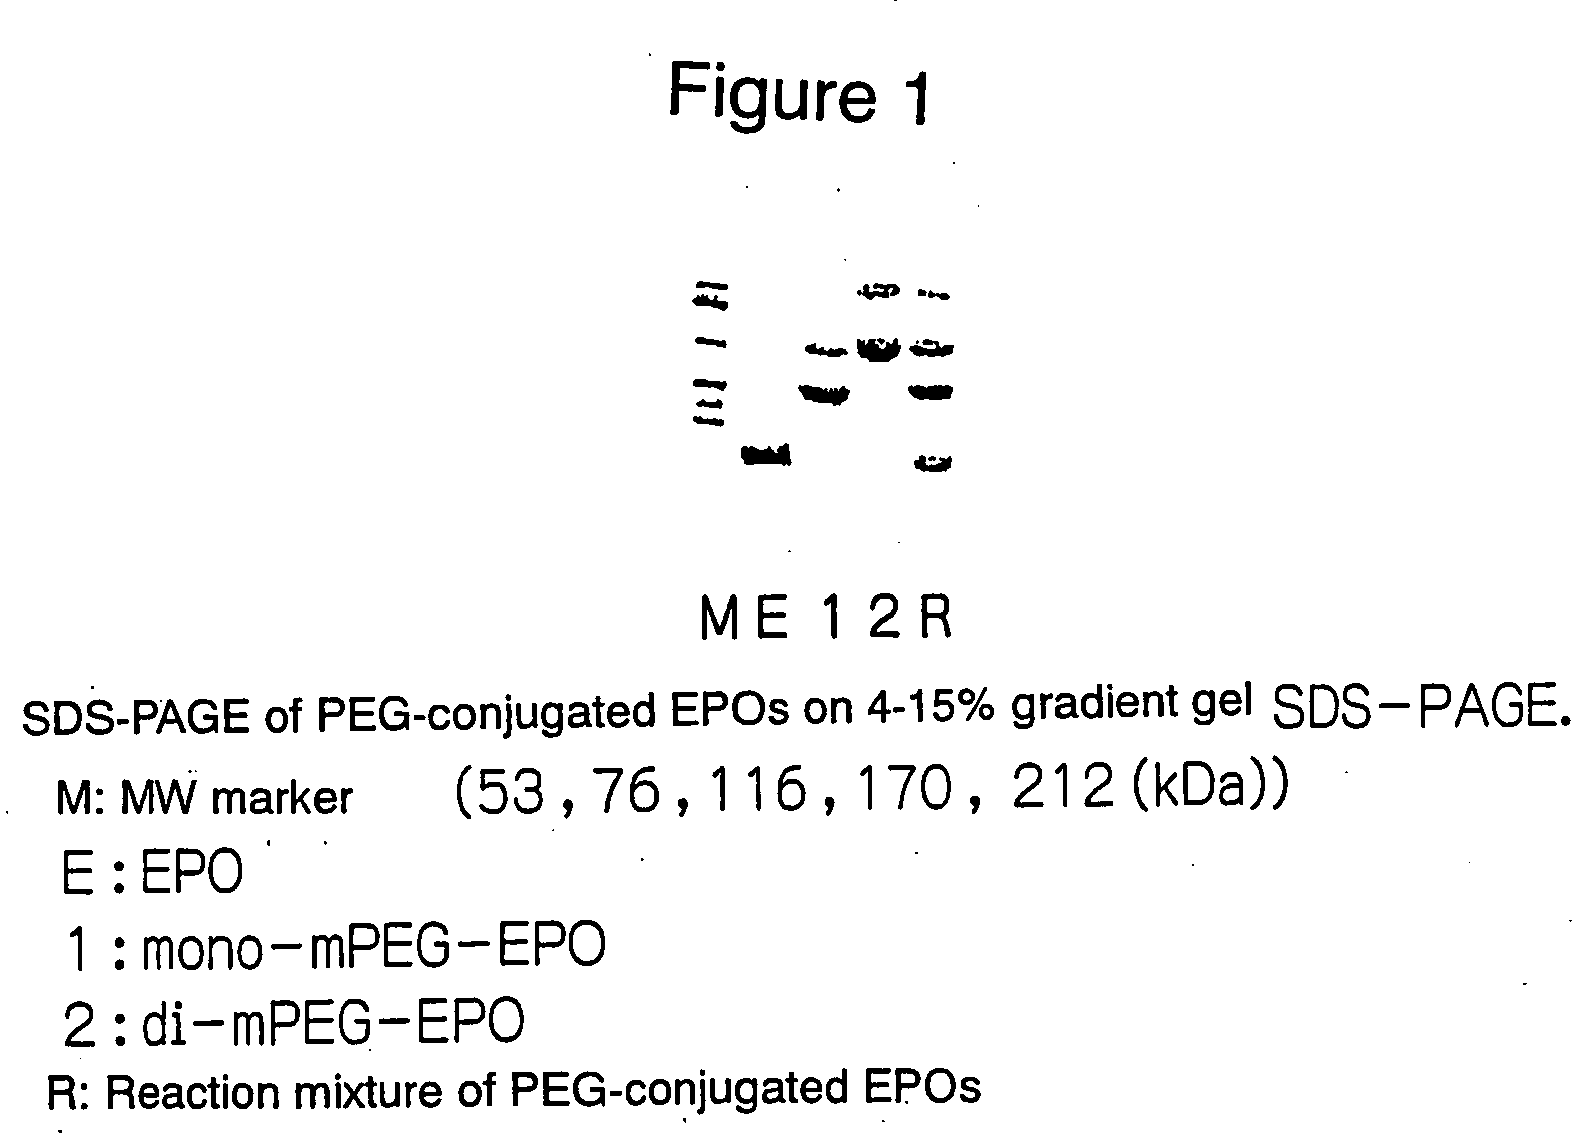 PEG-conjugated erythropoietin